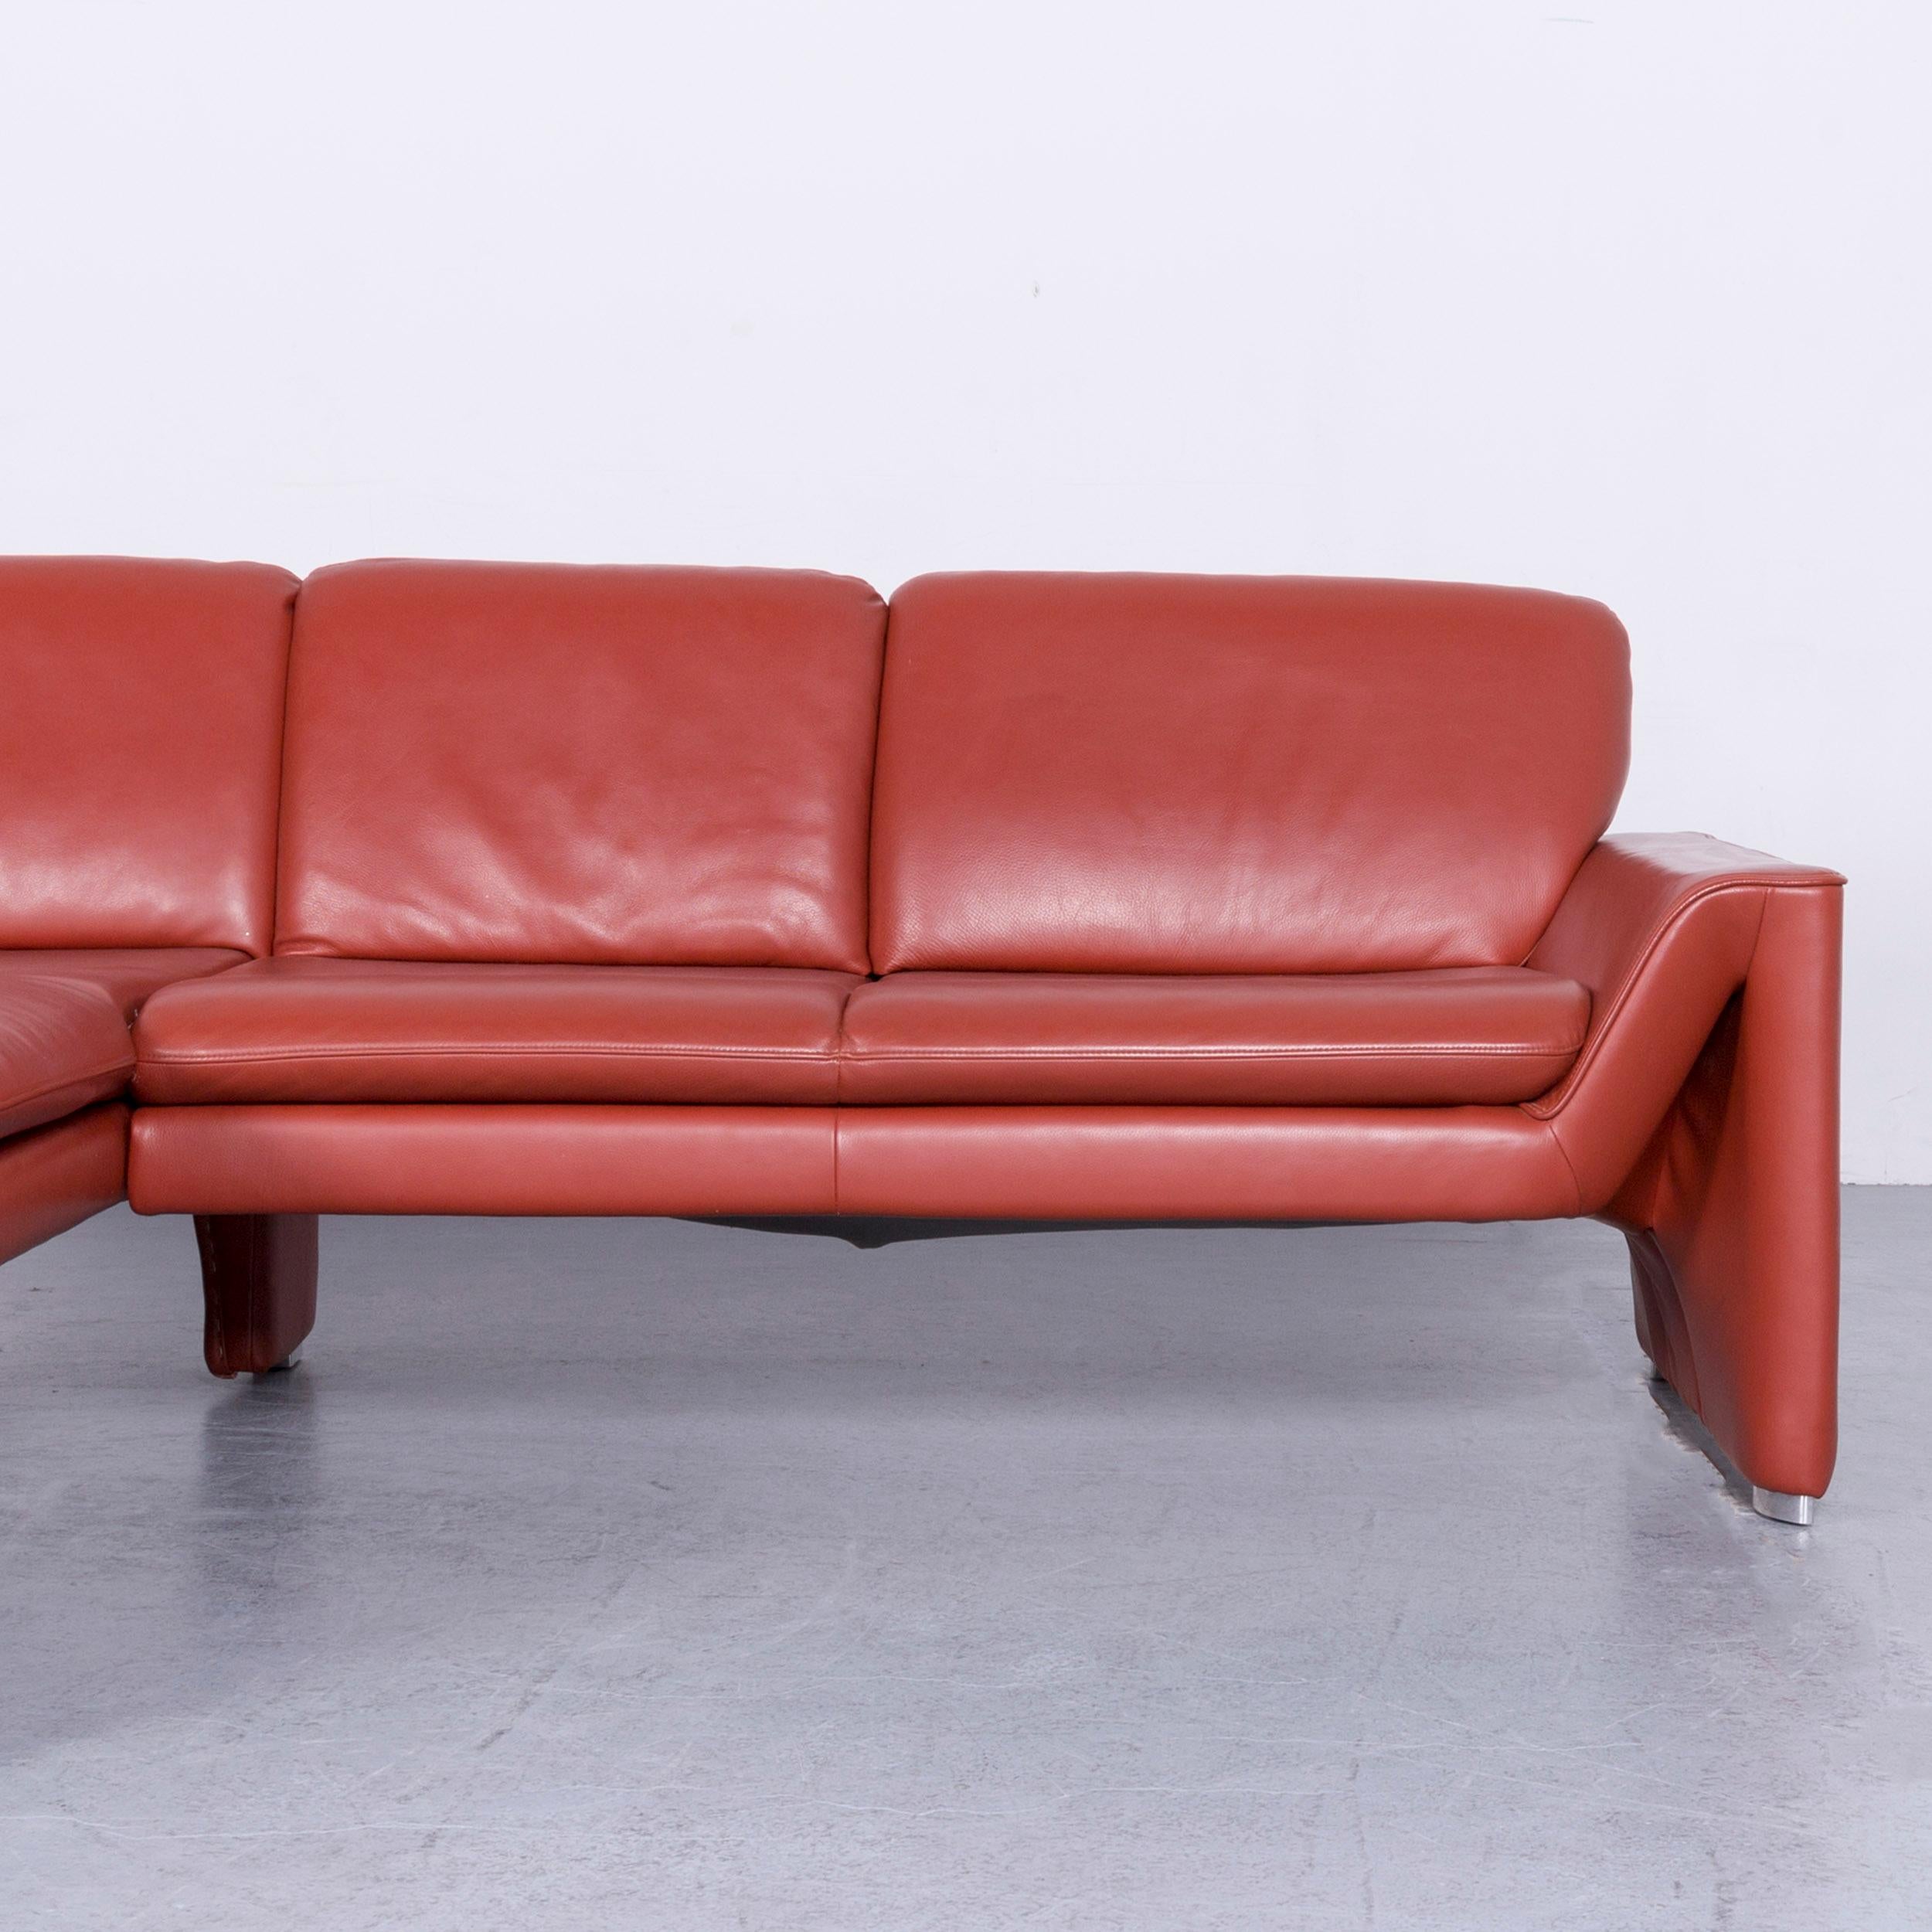 Contemporary Laauser Corvus Designer Corner Sofa Leather Red Three-Seat Couch Modern